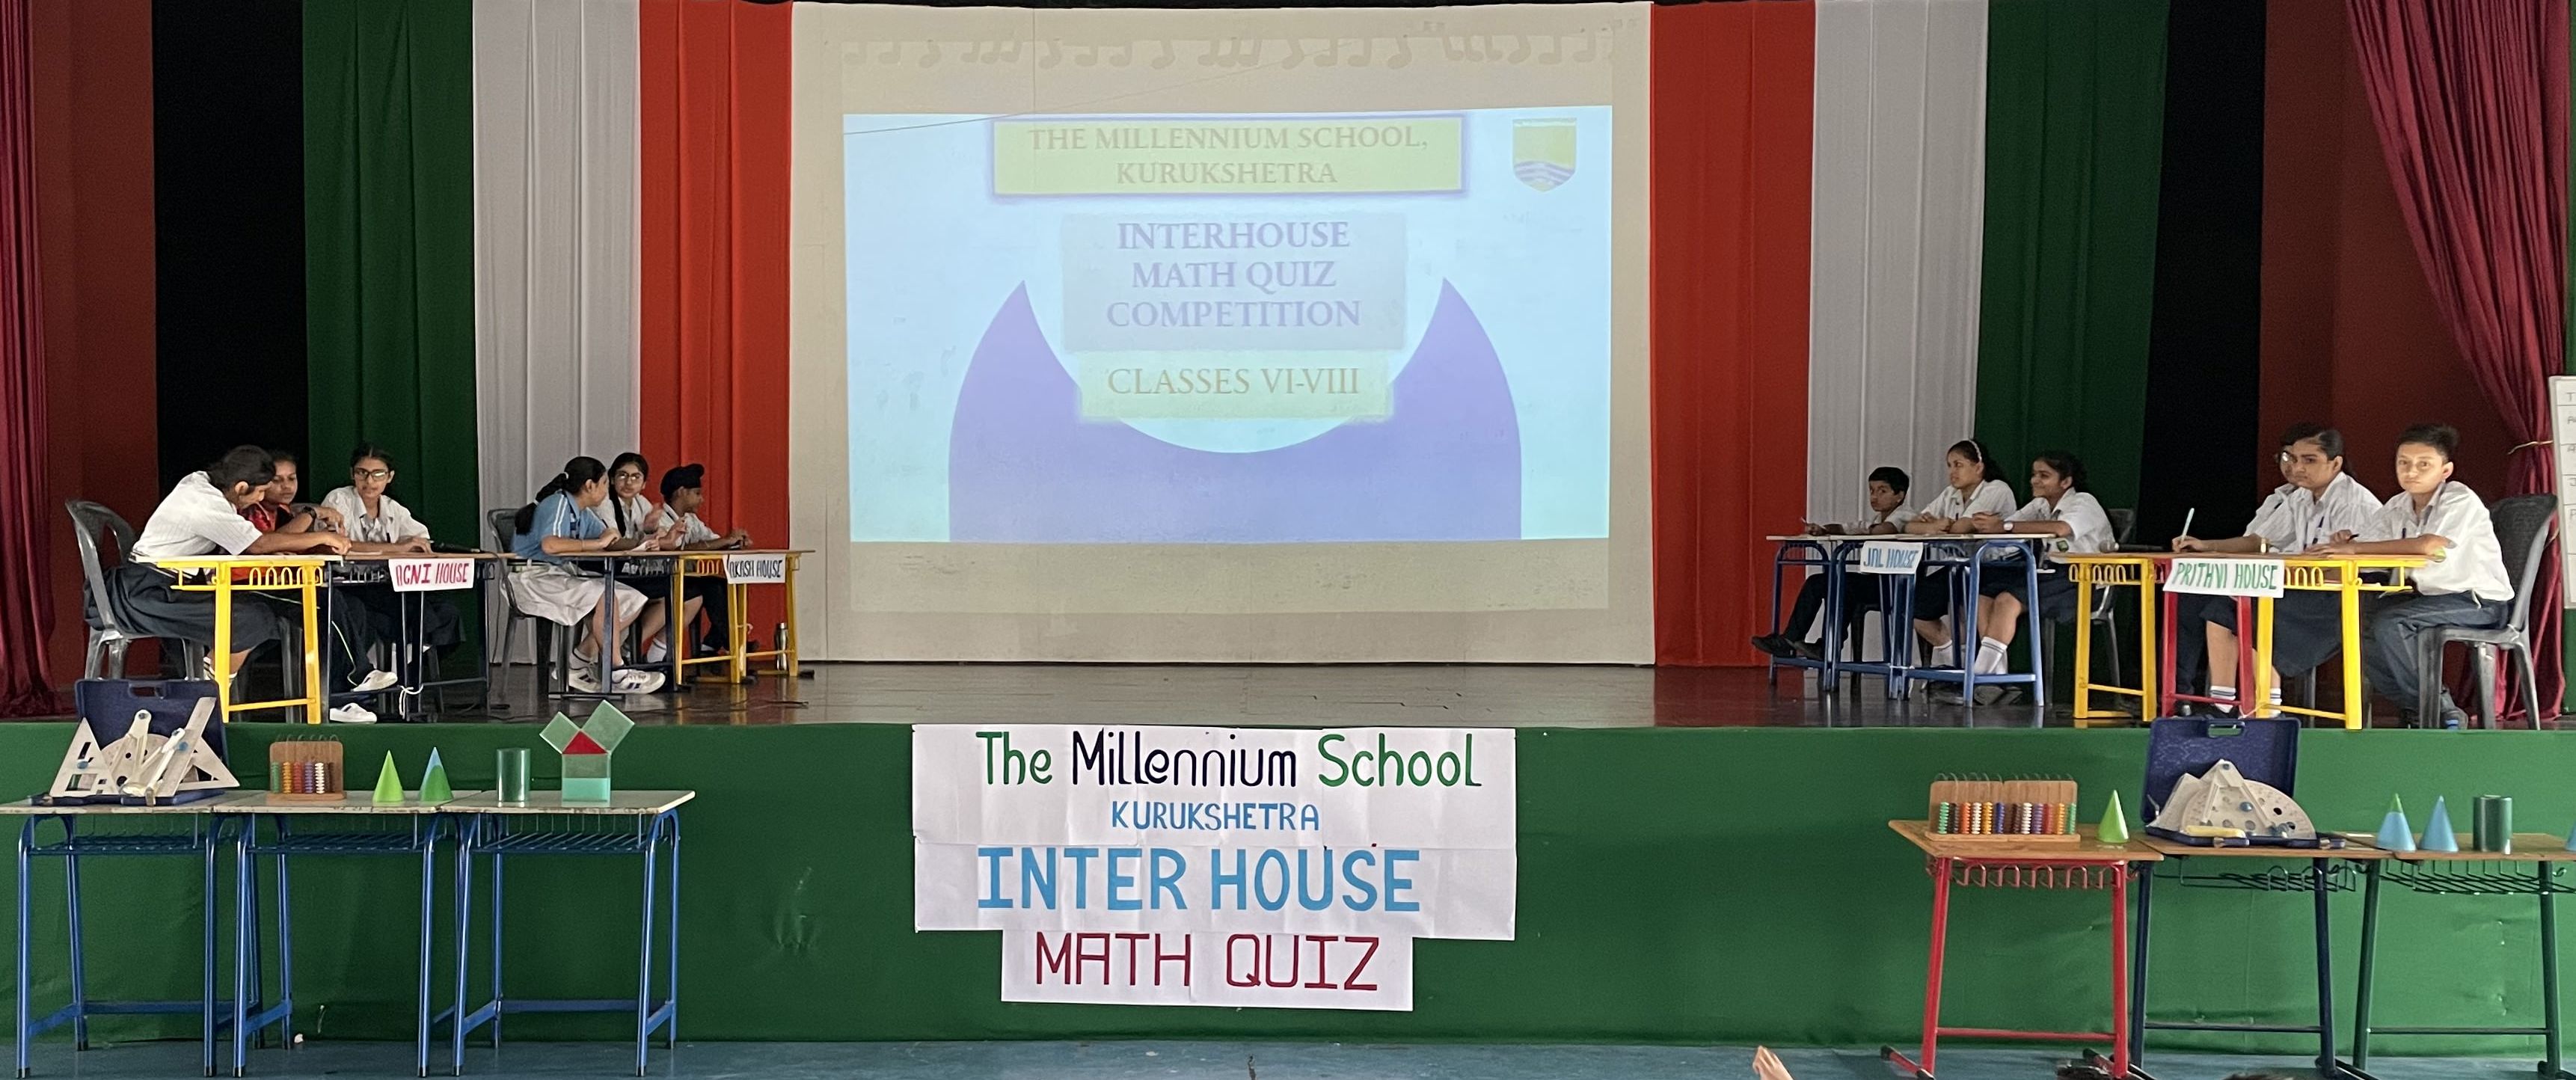 The Millennium School, Kurukshetra Organizes  Inter-house Maths Quiz